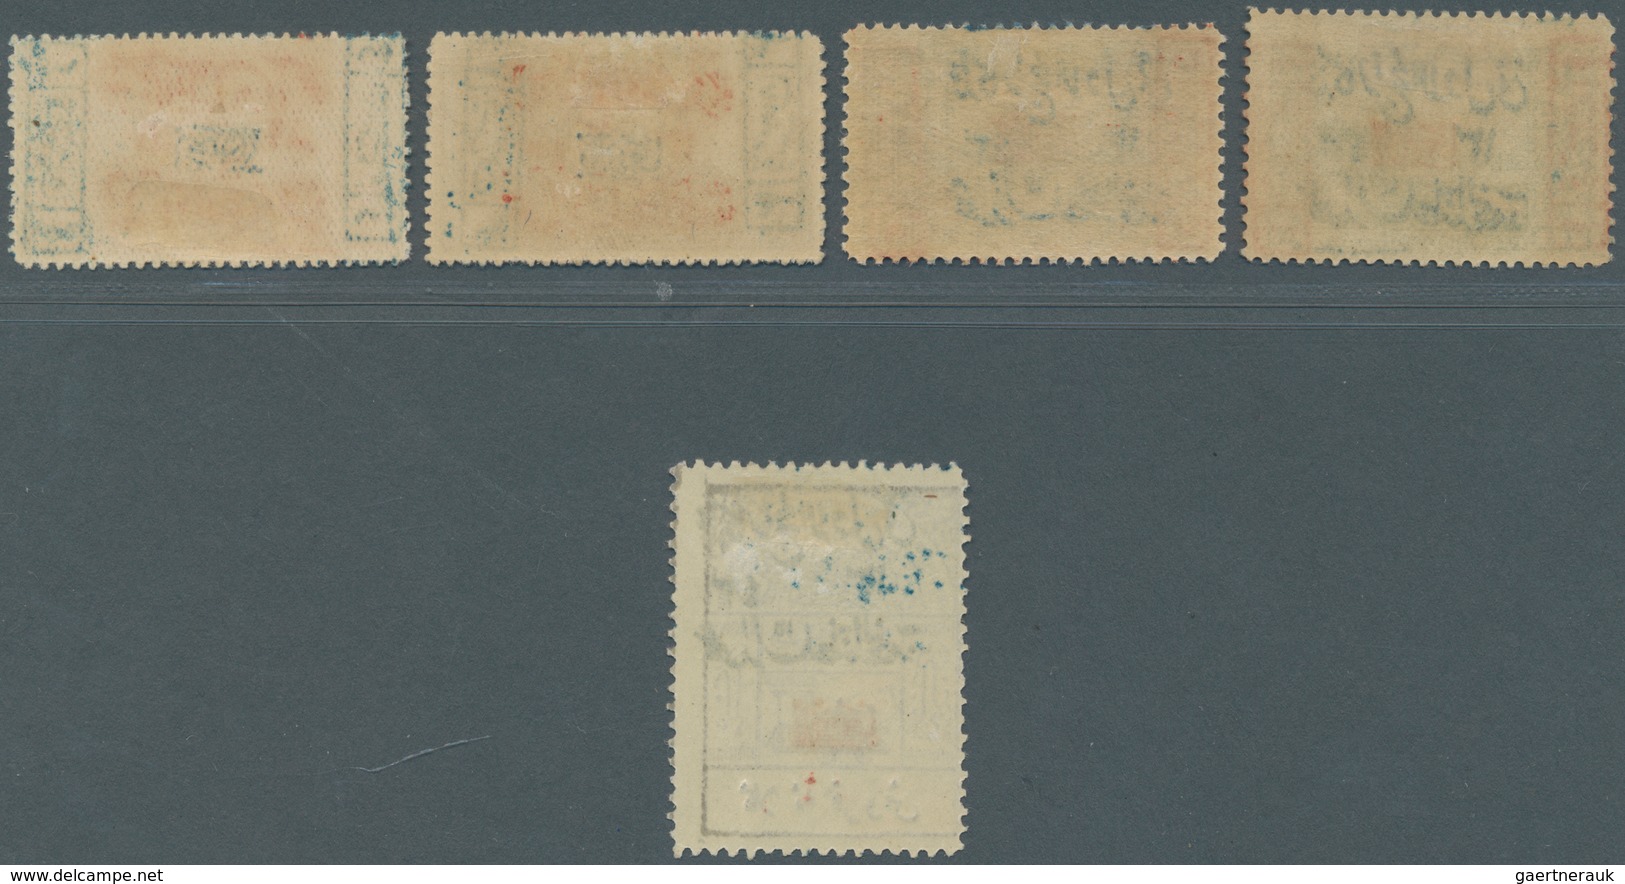 Saudi-Arabien - Nedschd: 1925, Pilgrimage Commemoration Set, Unused Mounted Mint (SG 210/14, Scott 3 - Saudi-Arabien